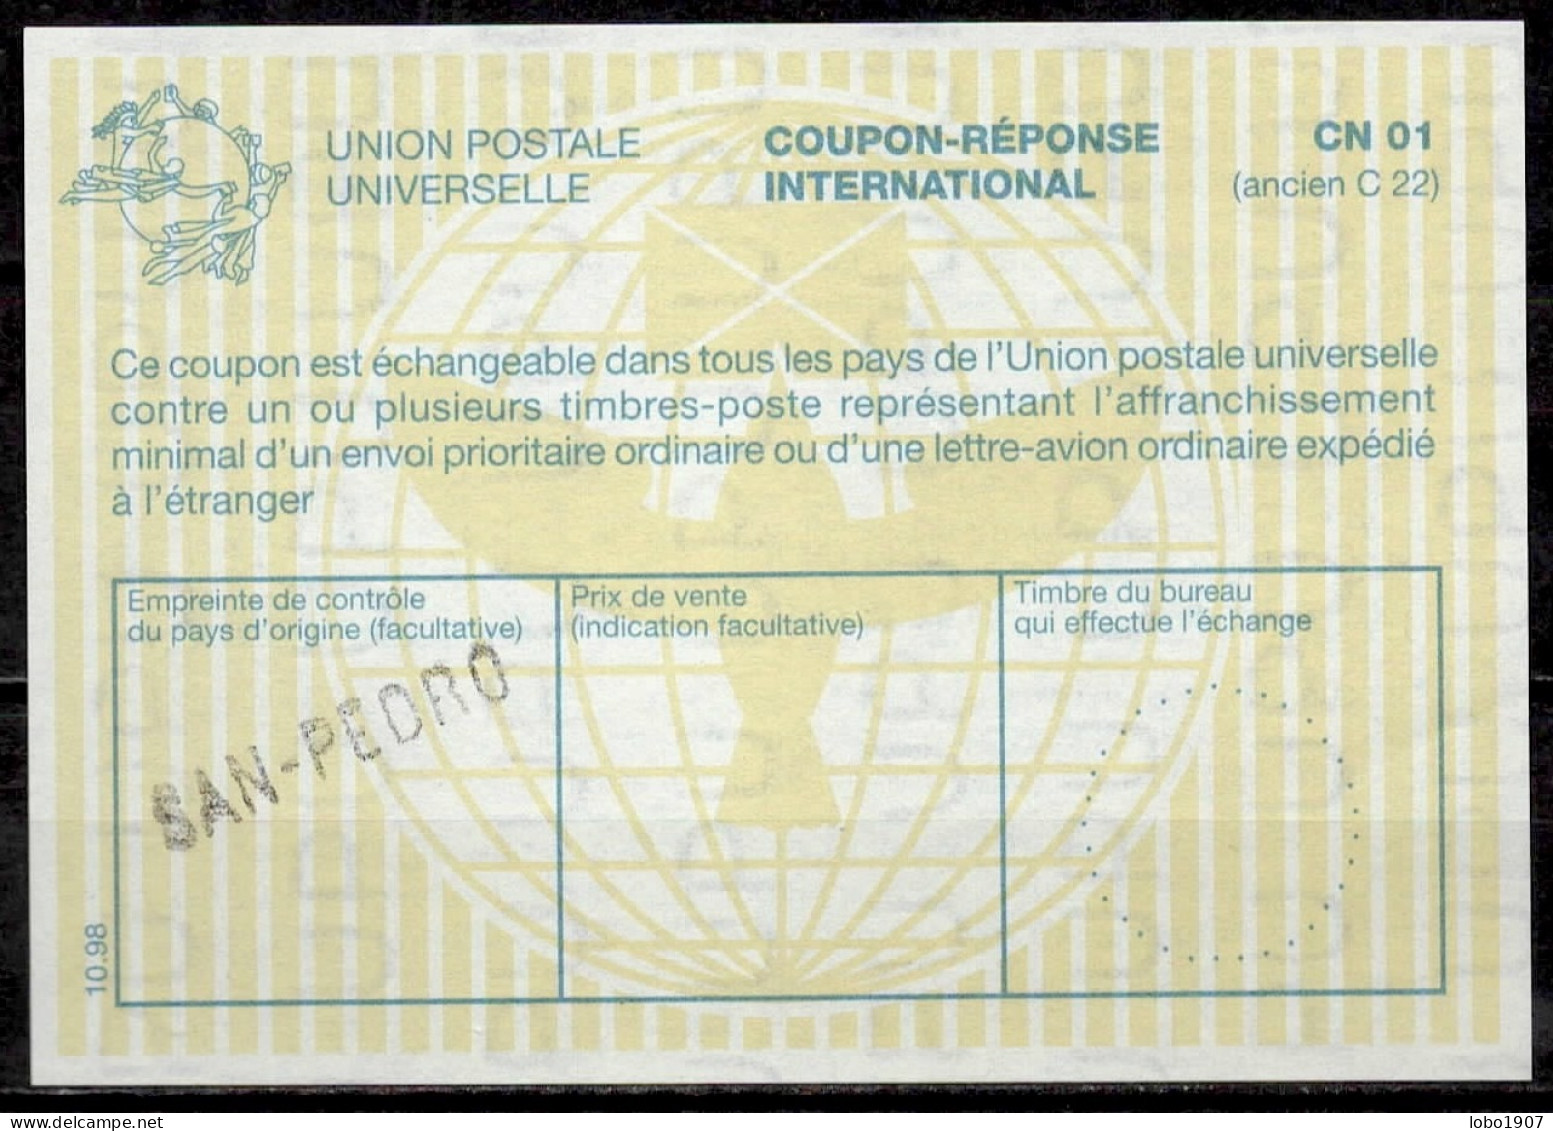 CÔTE D'IVOIRE IVORY COAST  La30  International Reply Coupon Reponse Antwortschein IRC IAS O SAN PEDRO - Ivory Coast (1960-...)